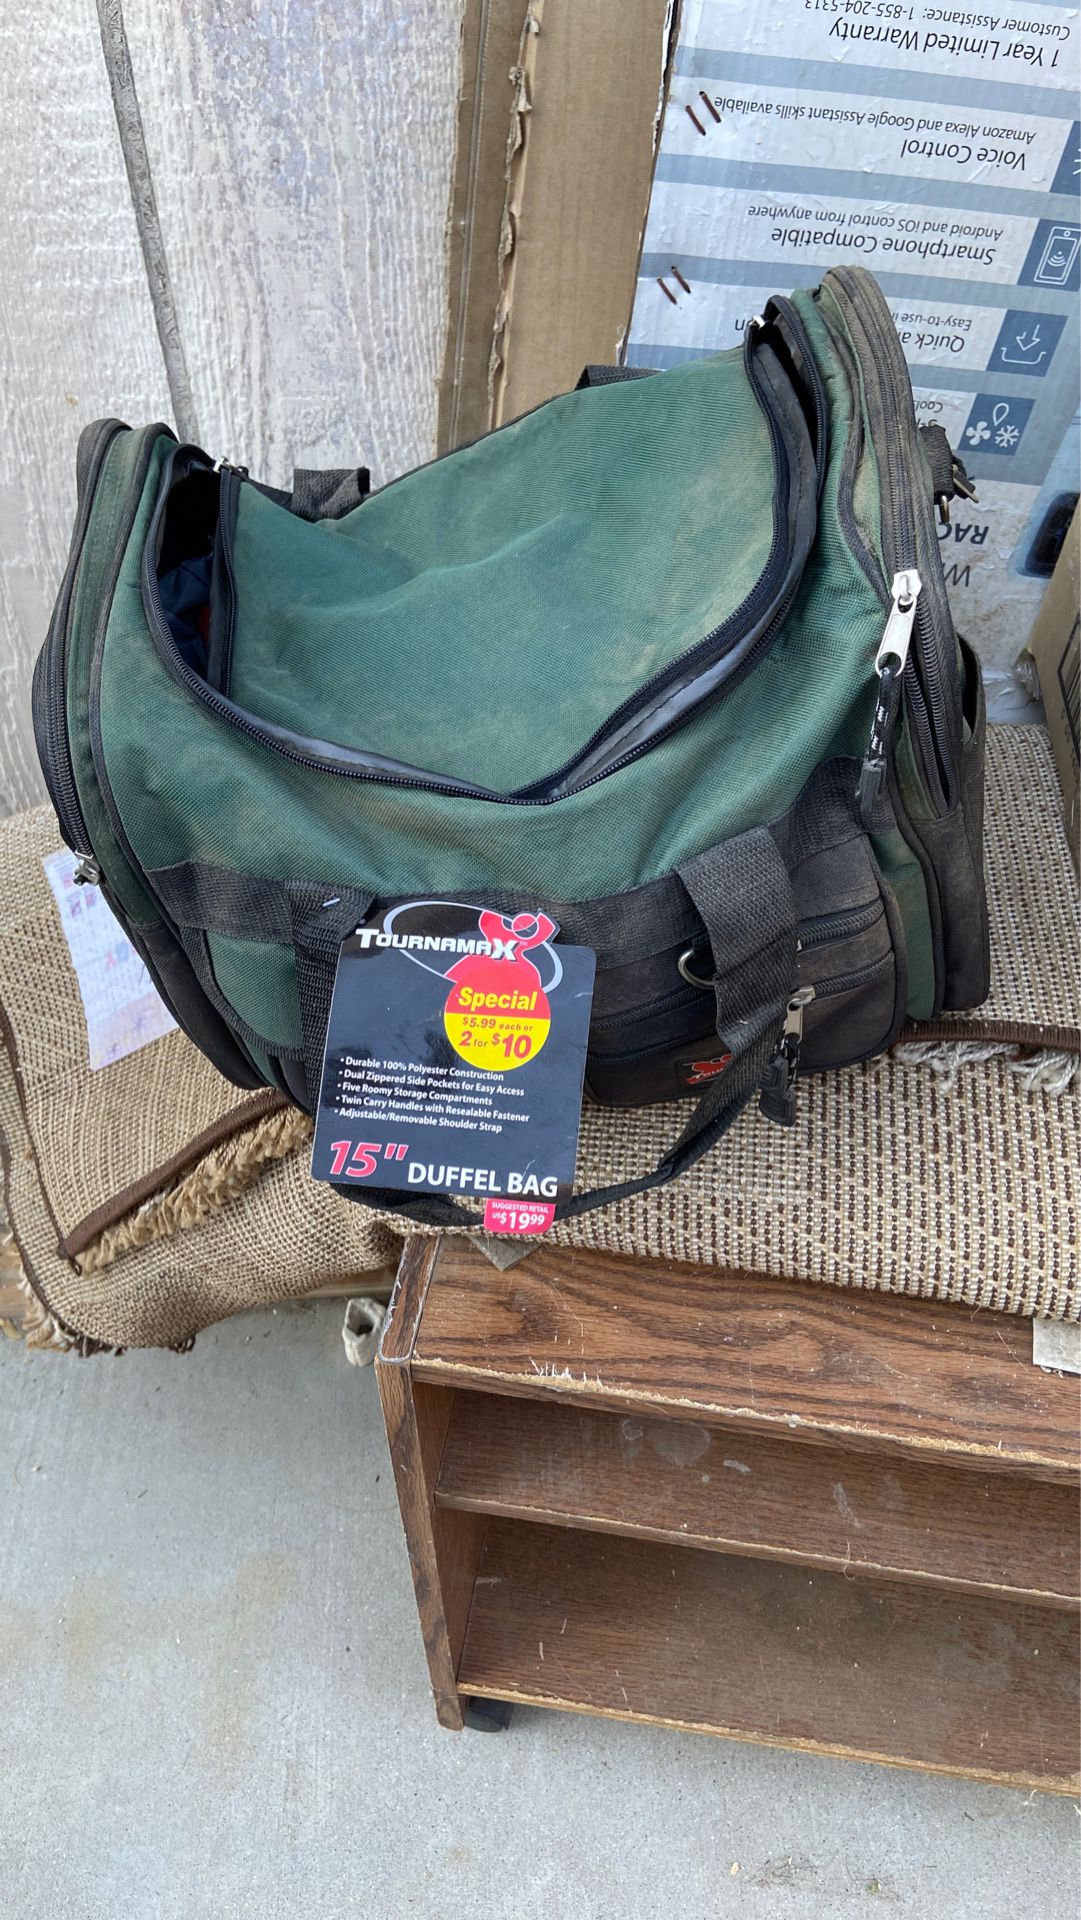 Duffle bag/ reusable tote